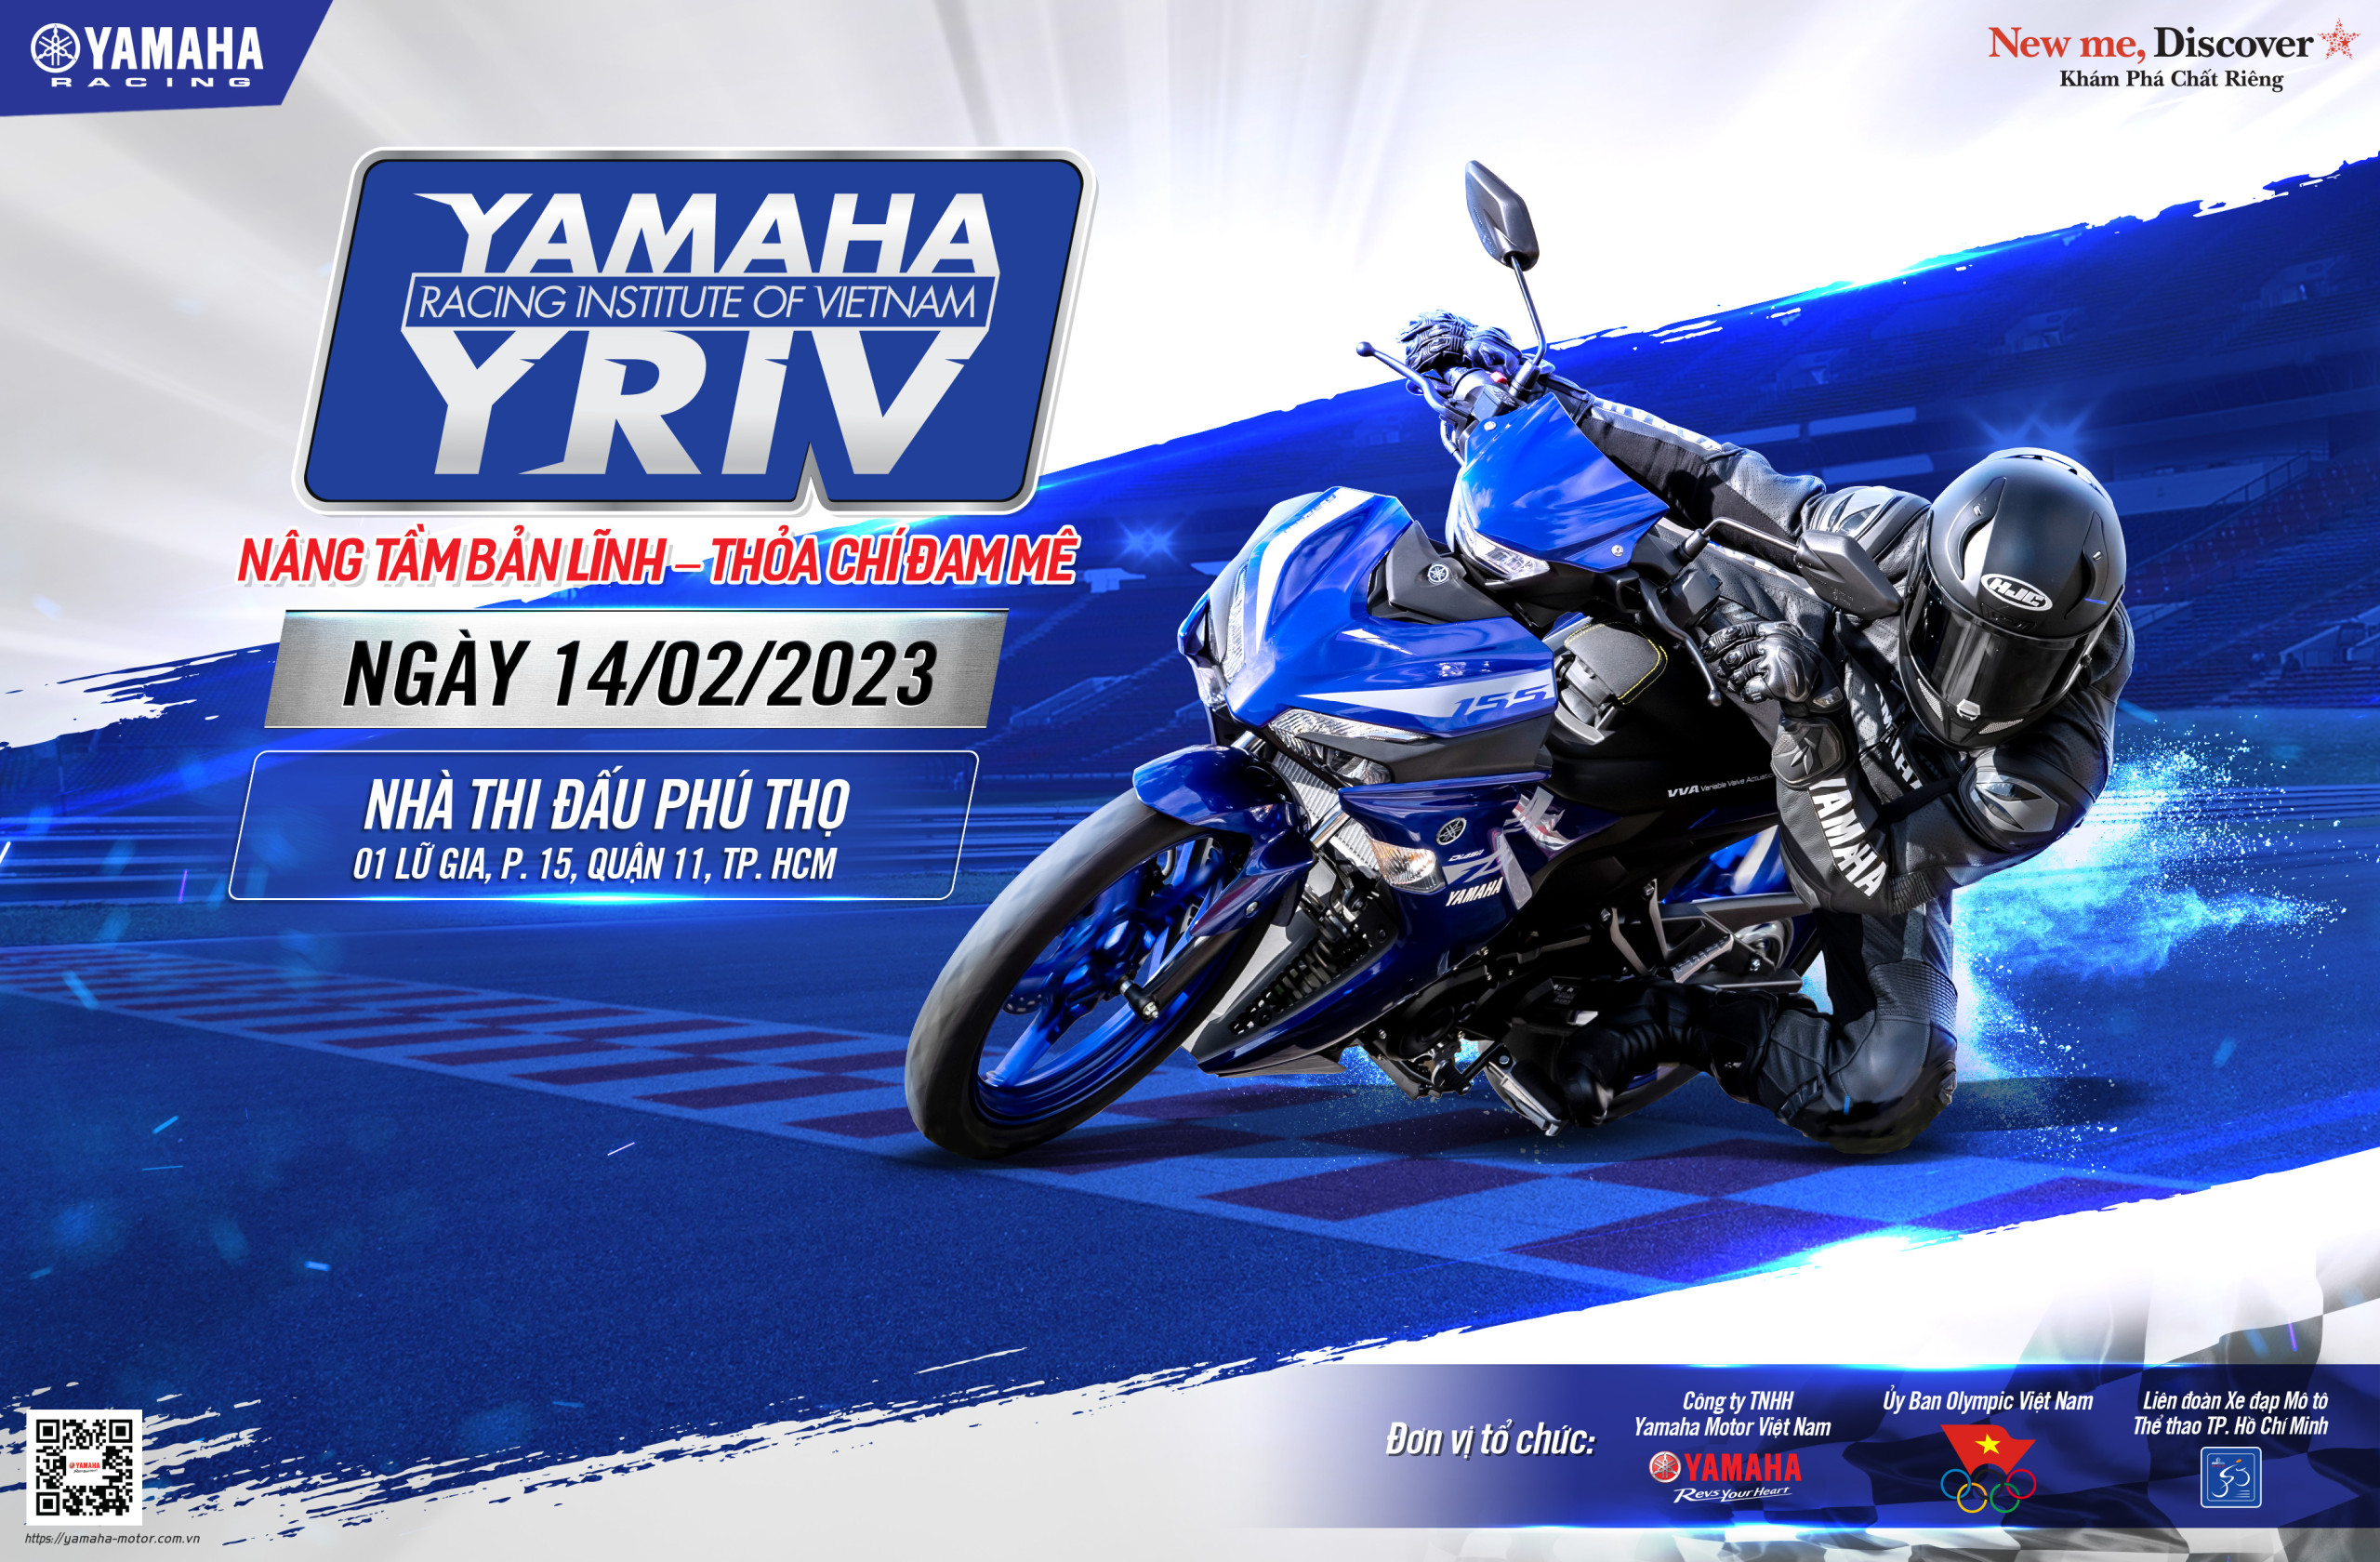 Yamaha Racing Institute of Vietnam